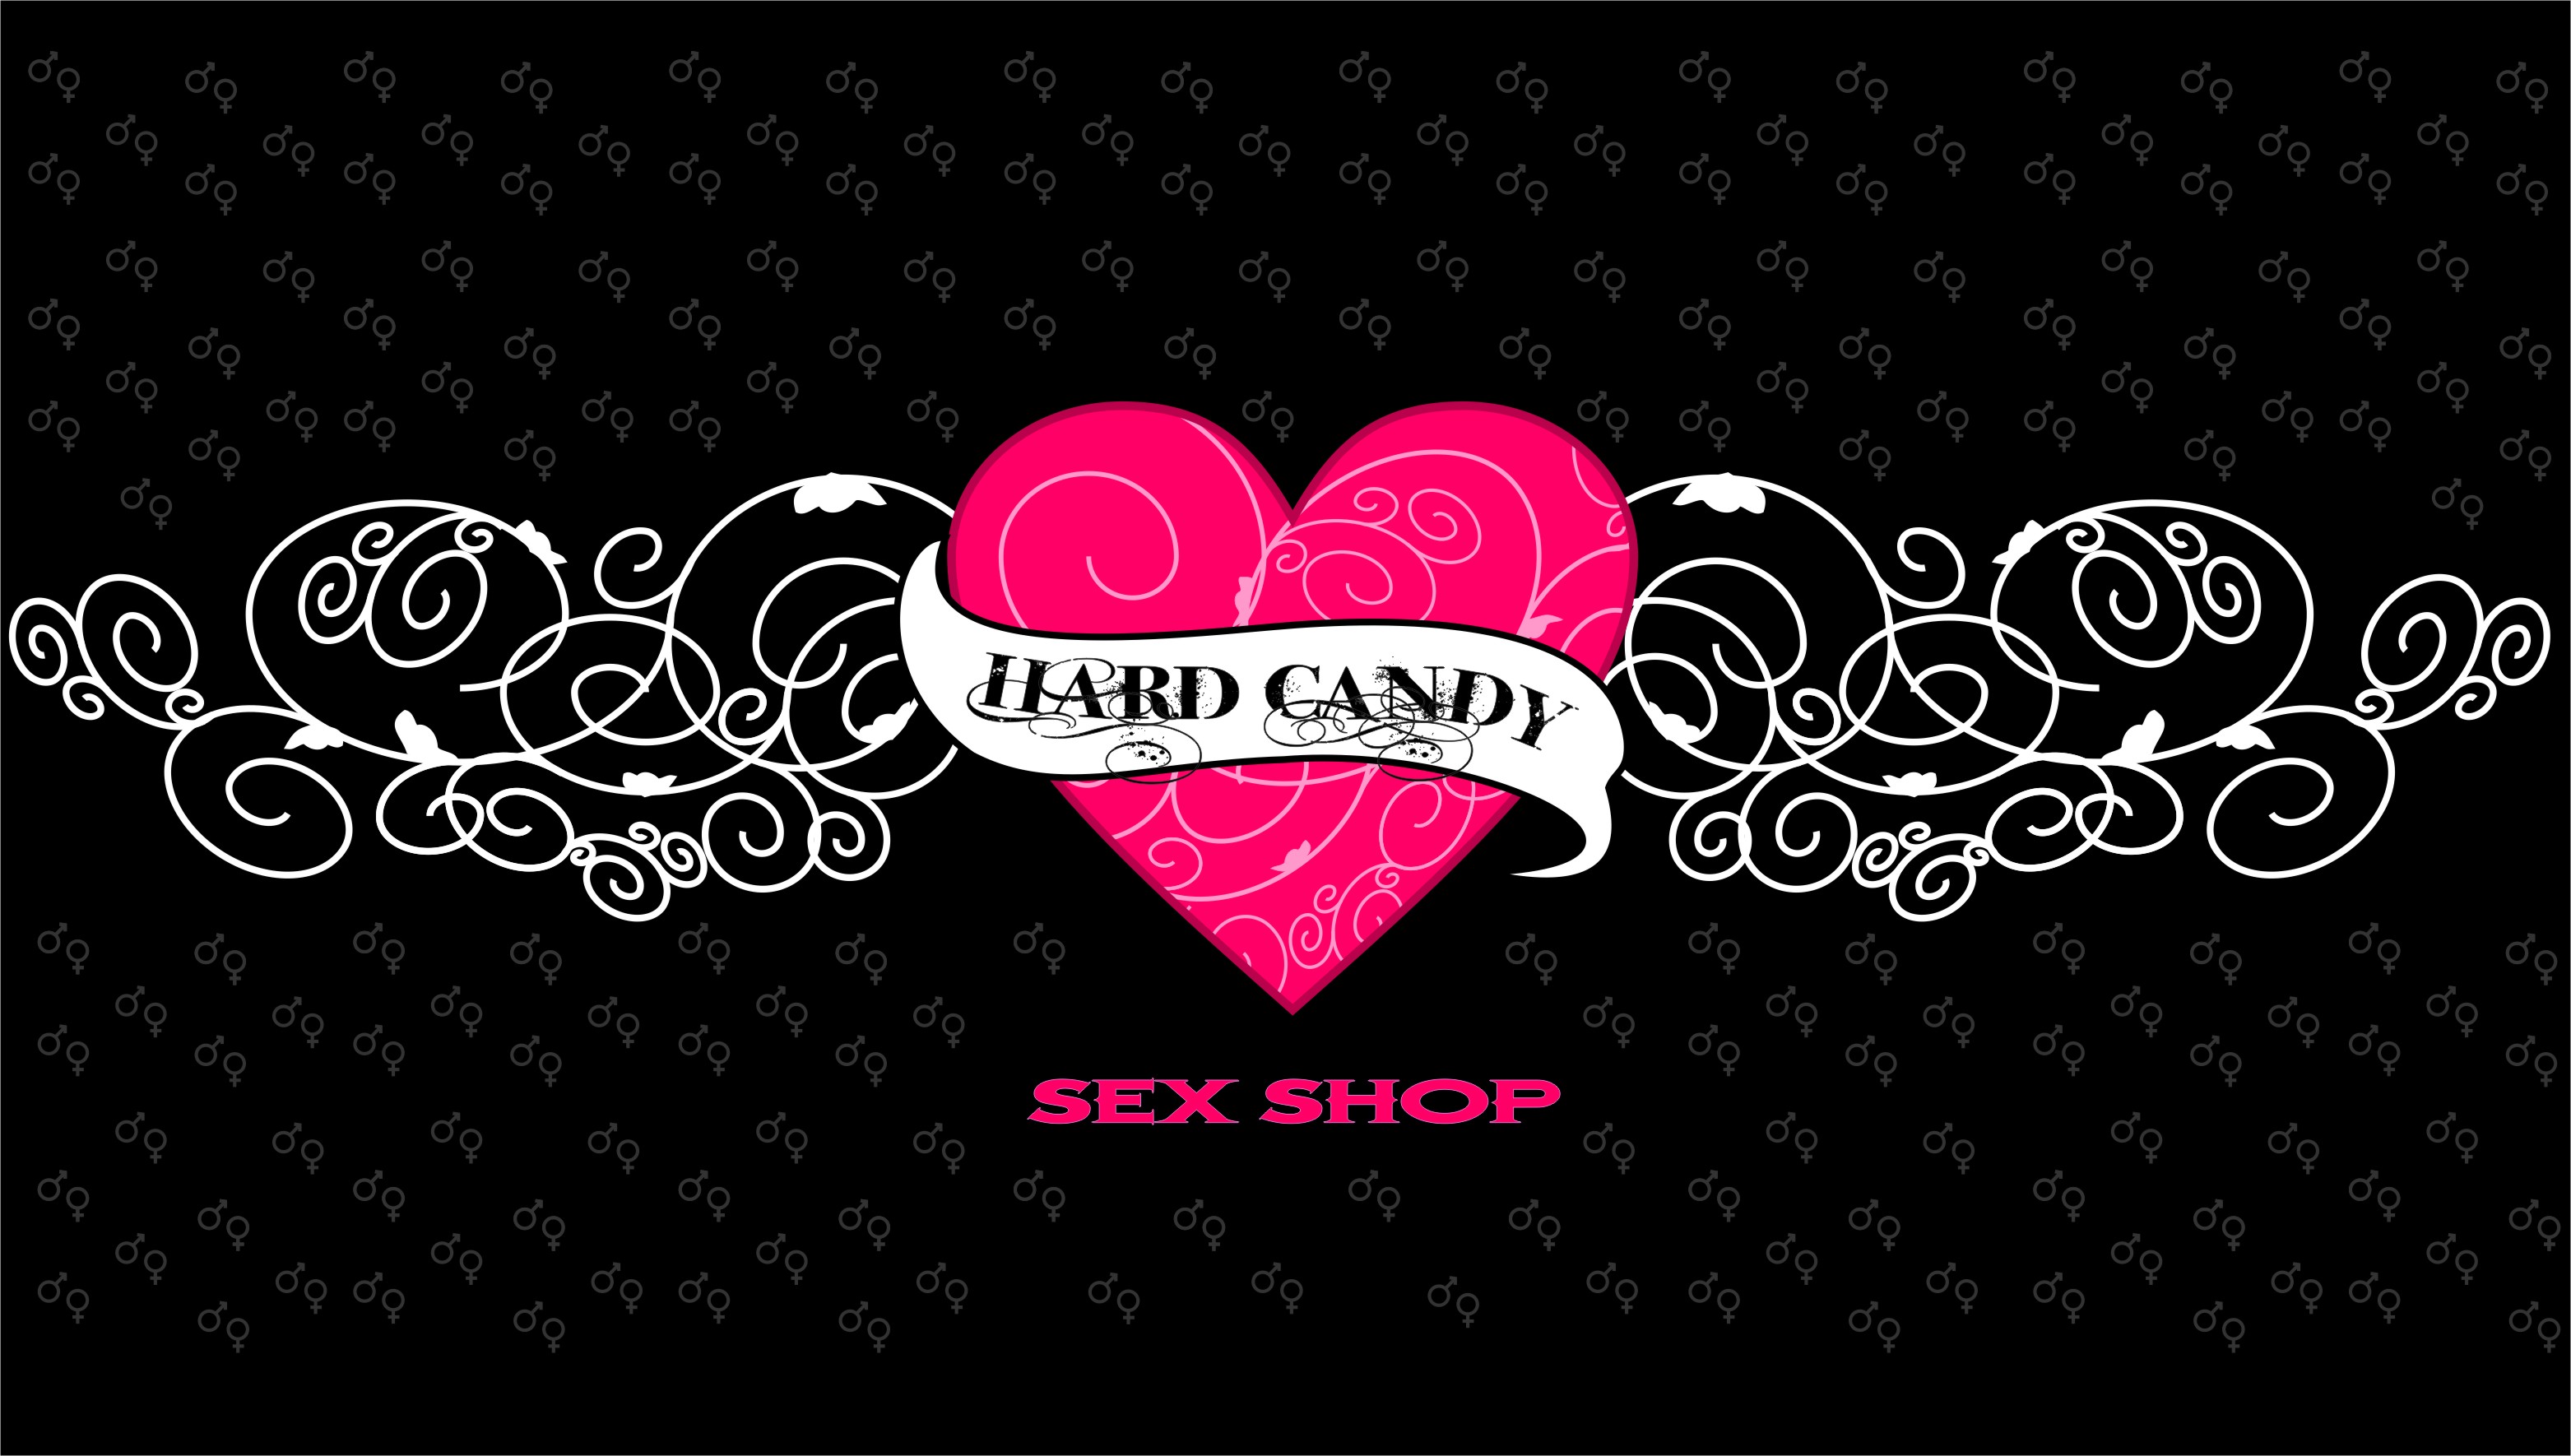 HARD CANDY SEX SHOP